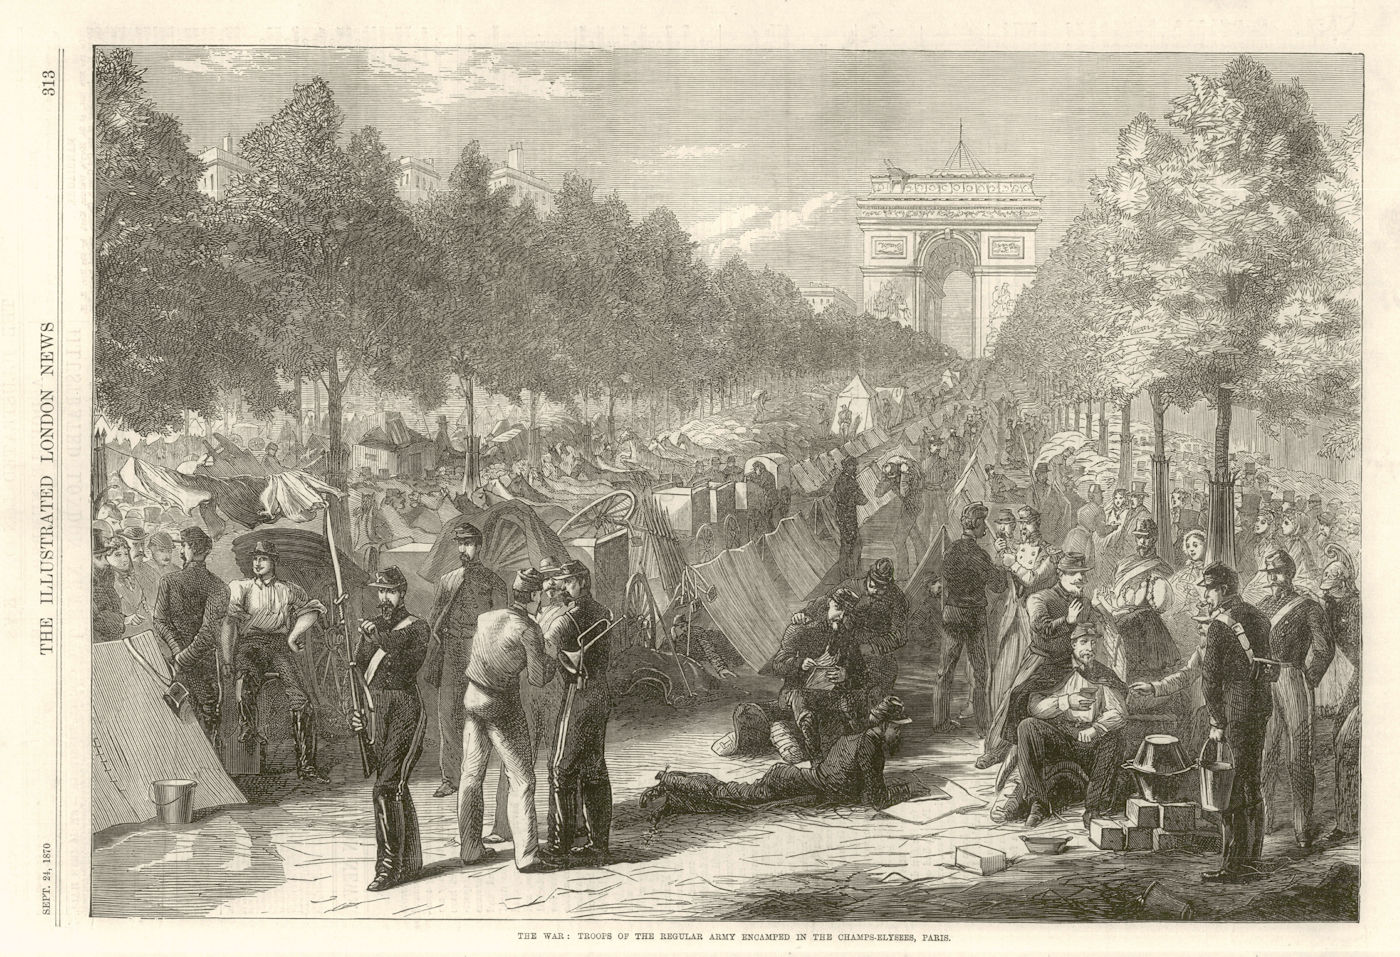 Franco-Prussian War: Troops encamped in the Champs Elysees, Paris 1870